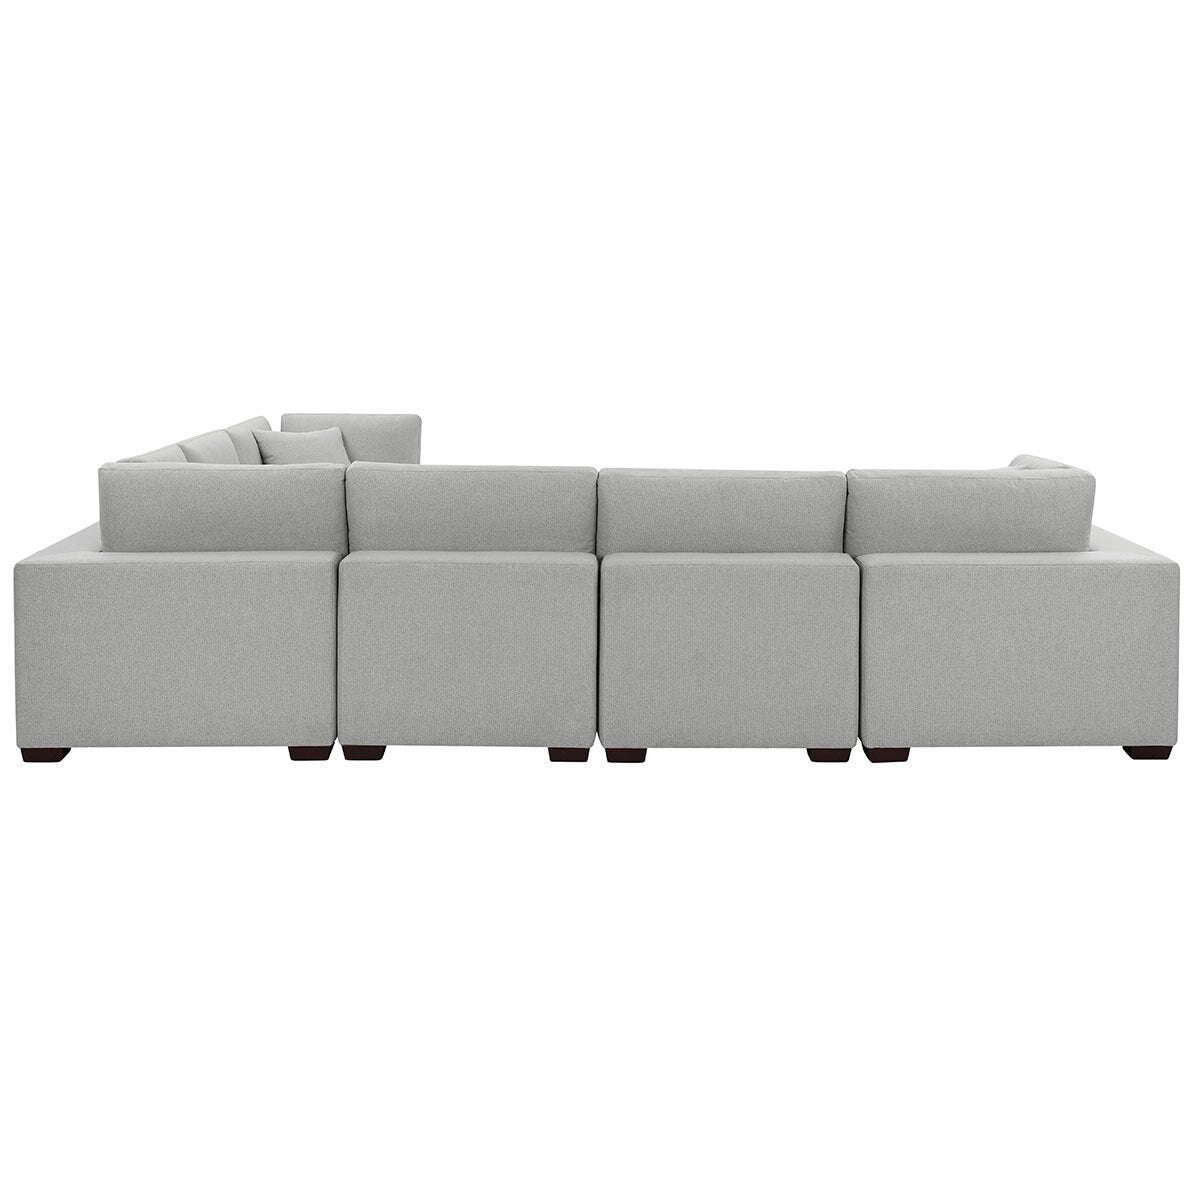 Thomasville Lowell Grey Fabric 8 Piece Modular Sofa - Signature Retail Stores